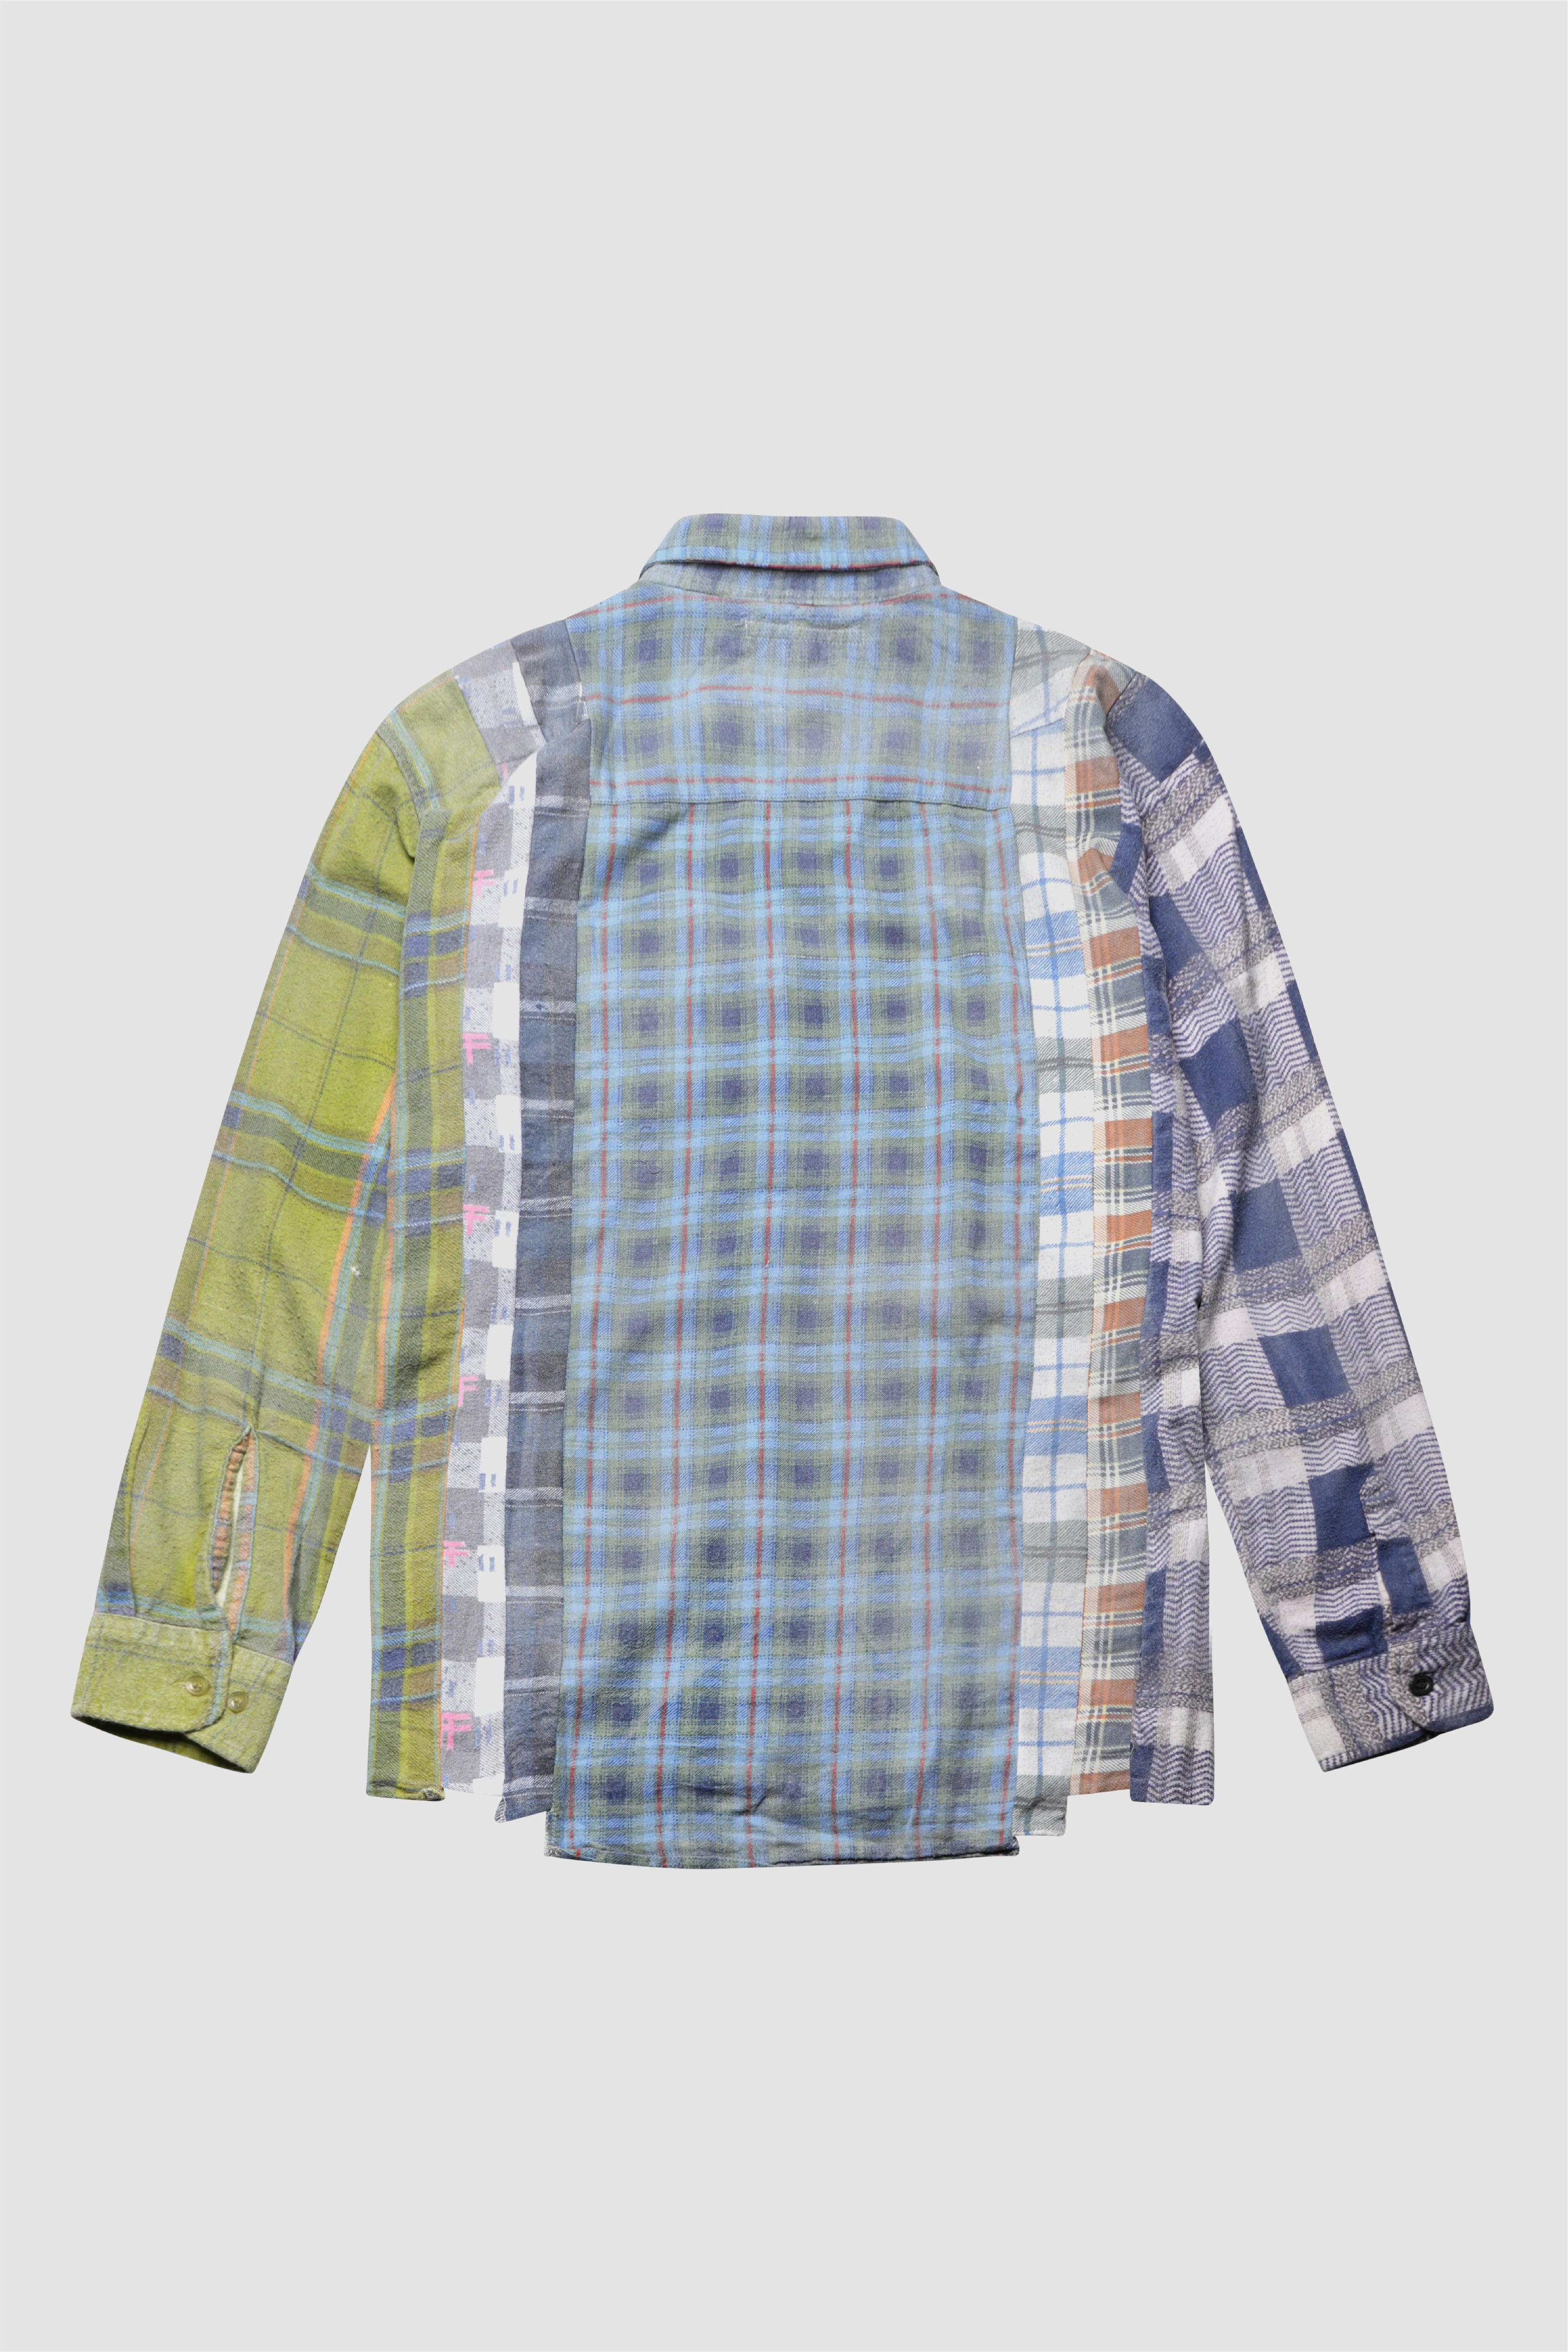 Selectshop FRAME - NEEDLES Reflection 7 Cuts Flannel Shirt - (M) Shirts Concept Store Dubai